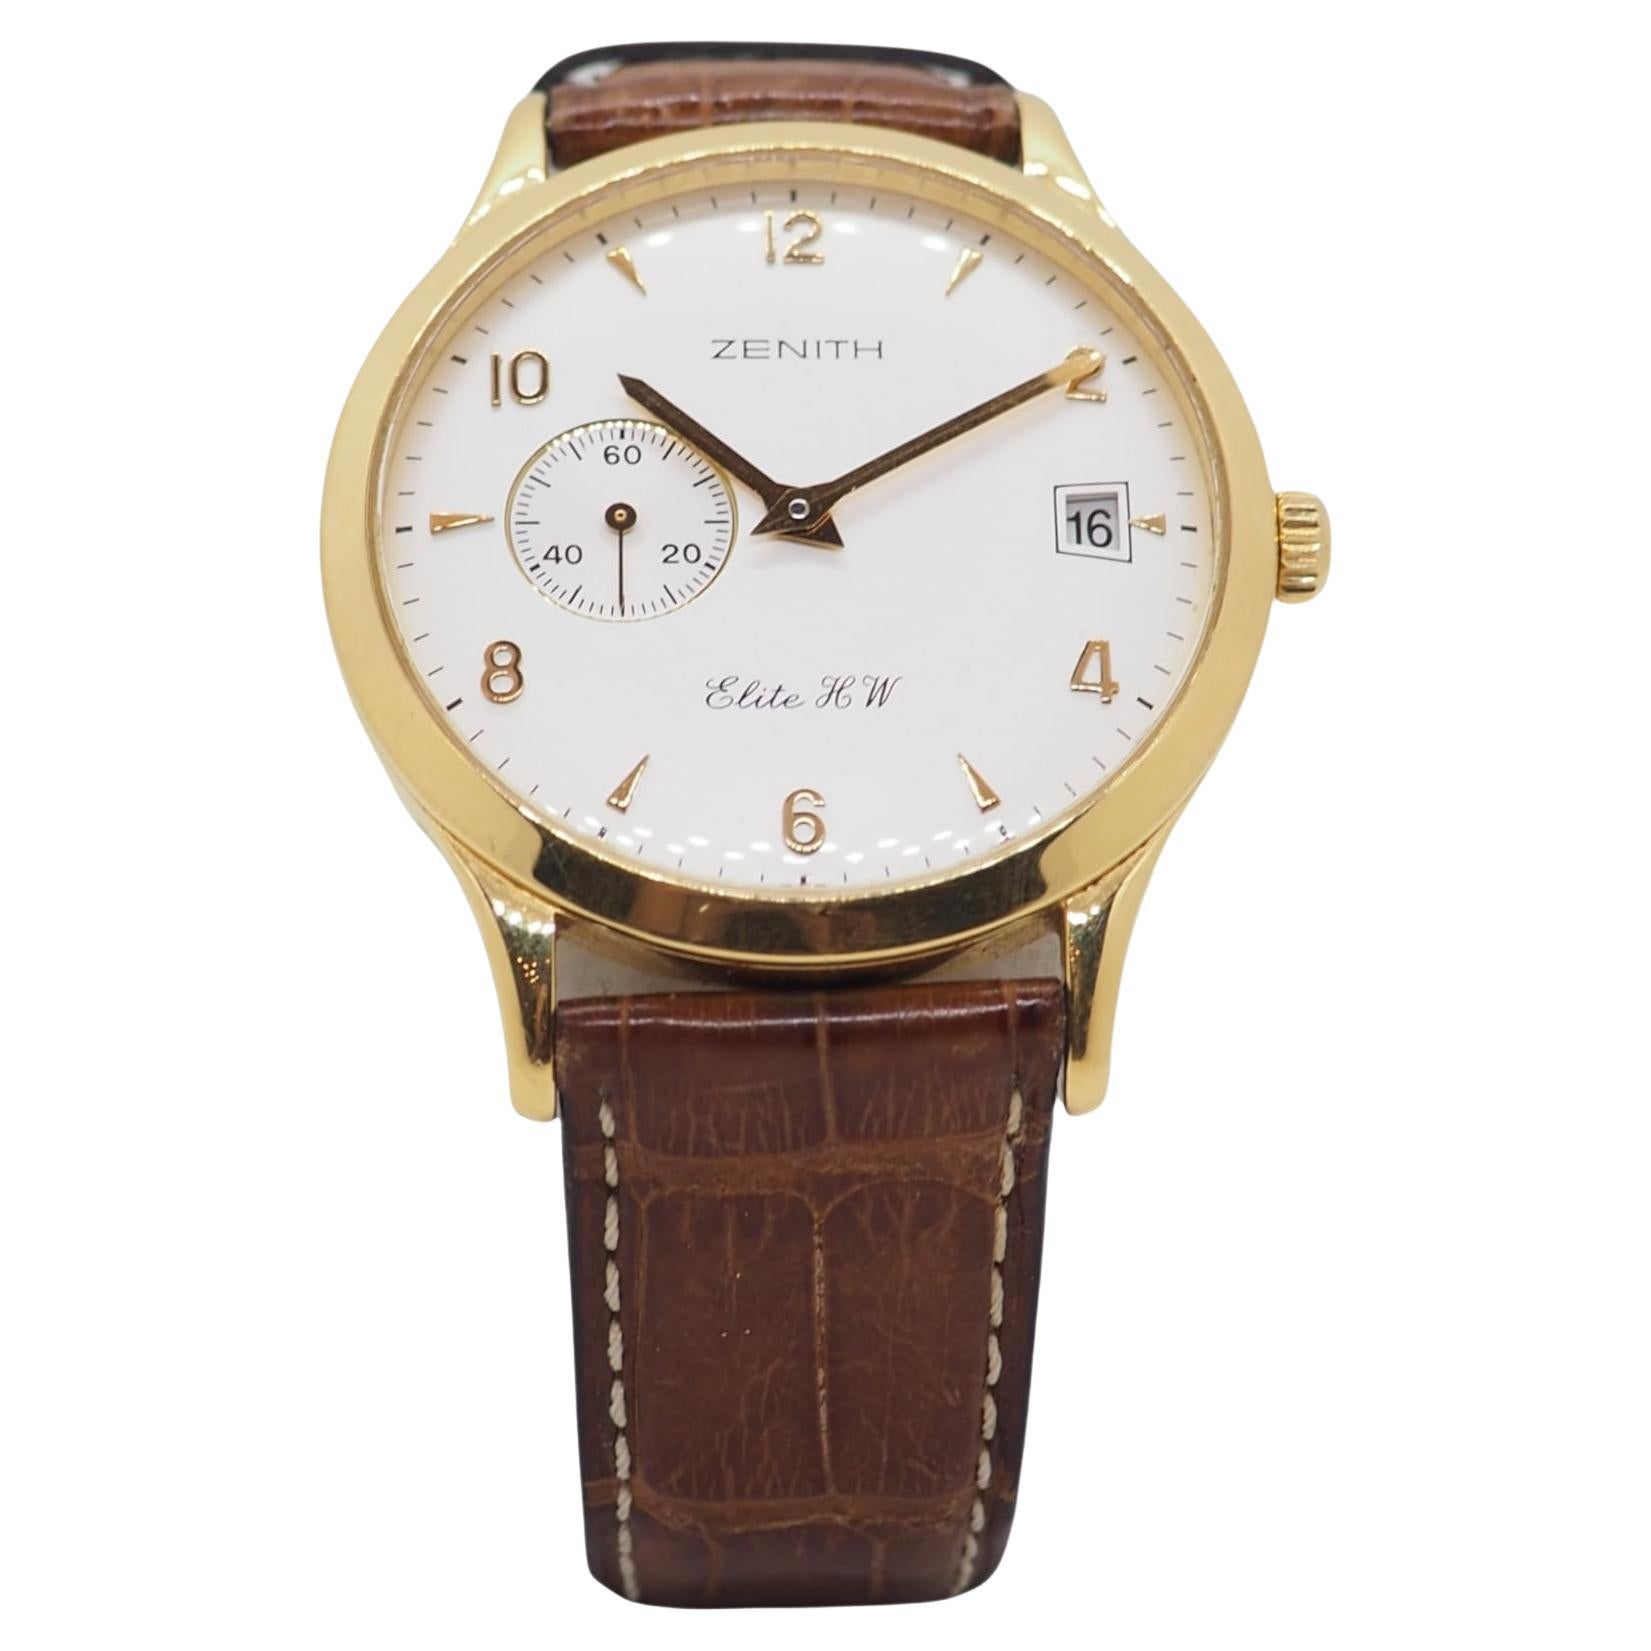 Vintage Watch Zenith Elite HW 18K Solid Yellow Gold Wrist Watch Men